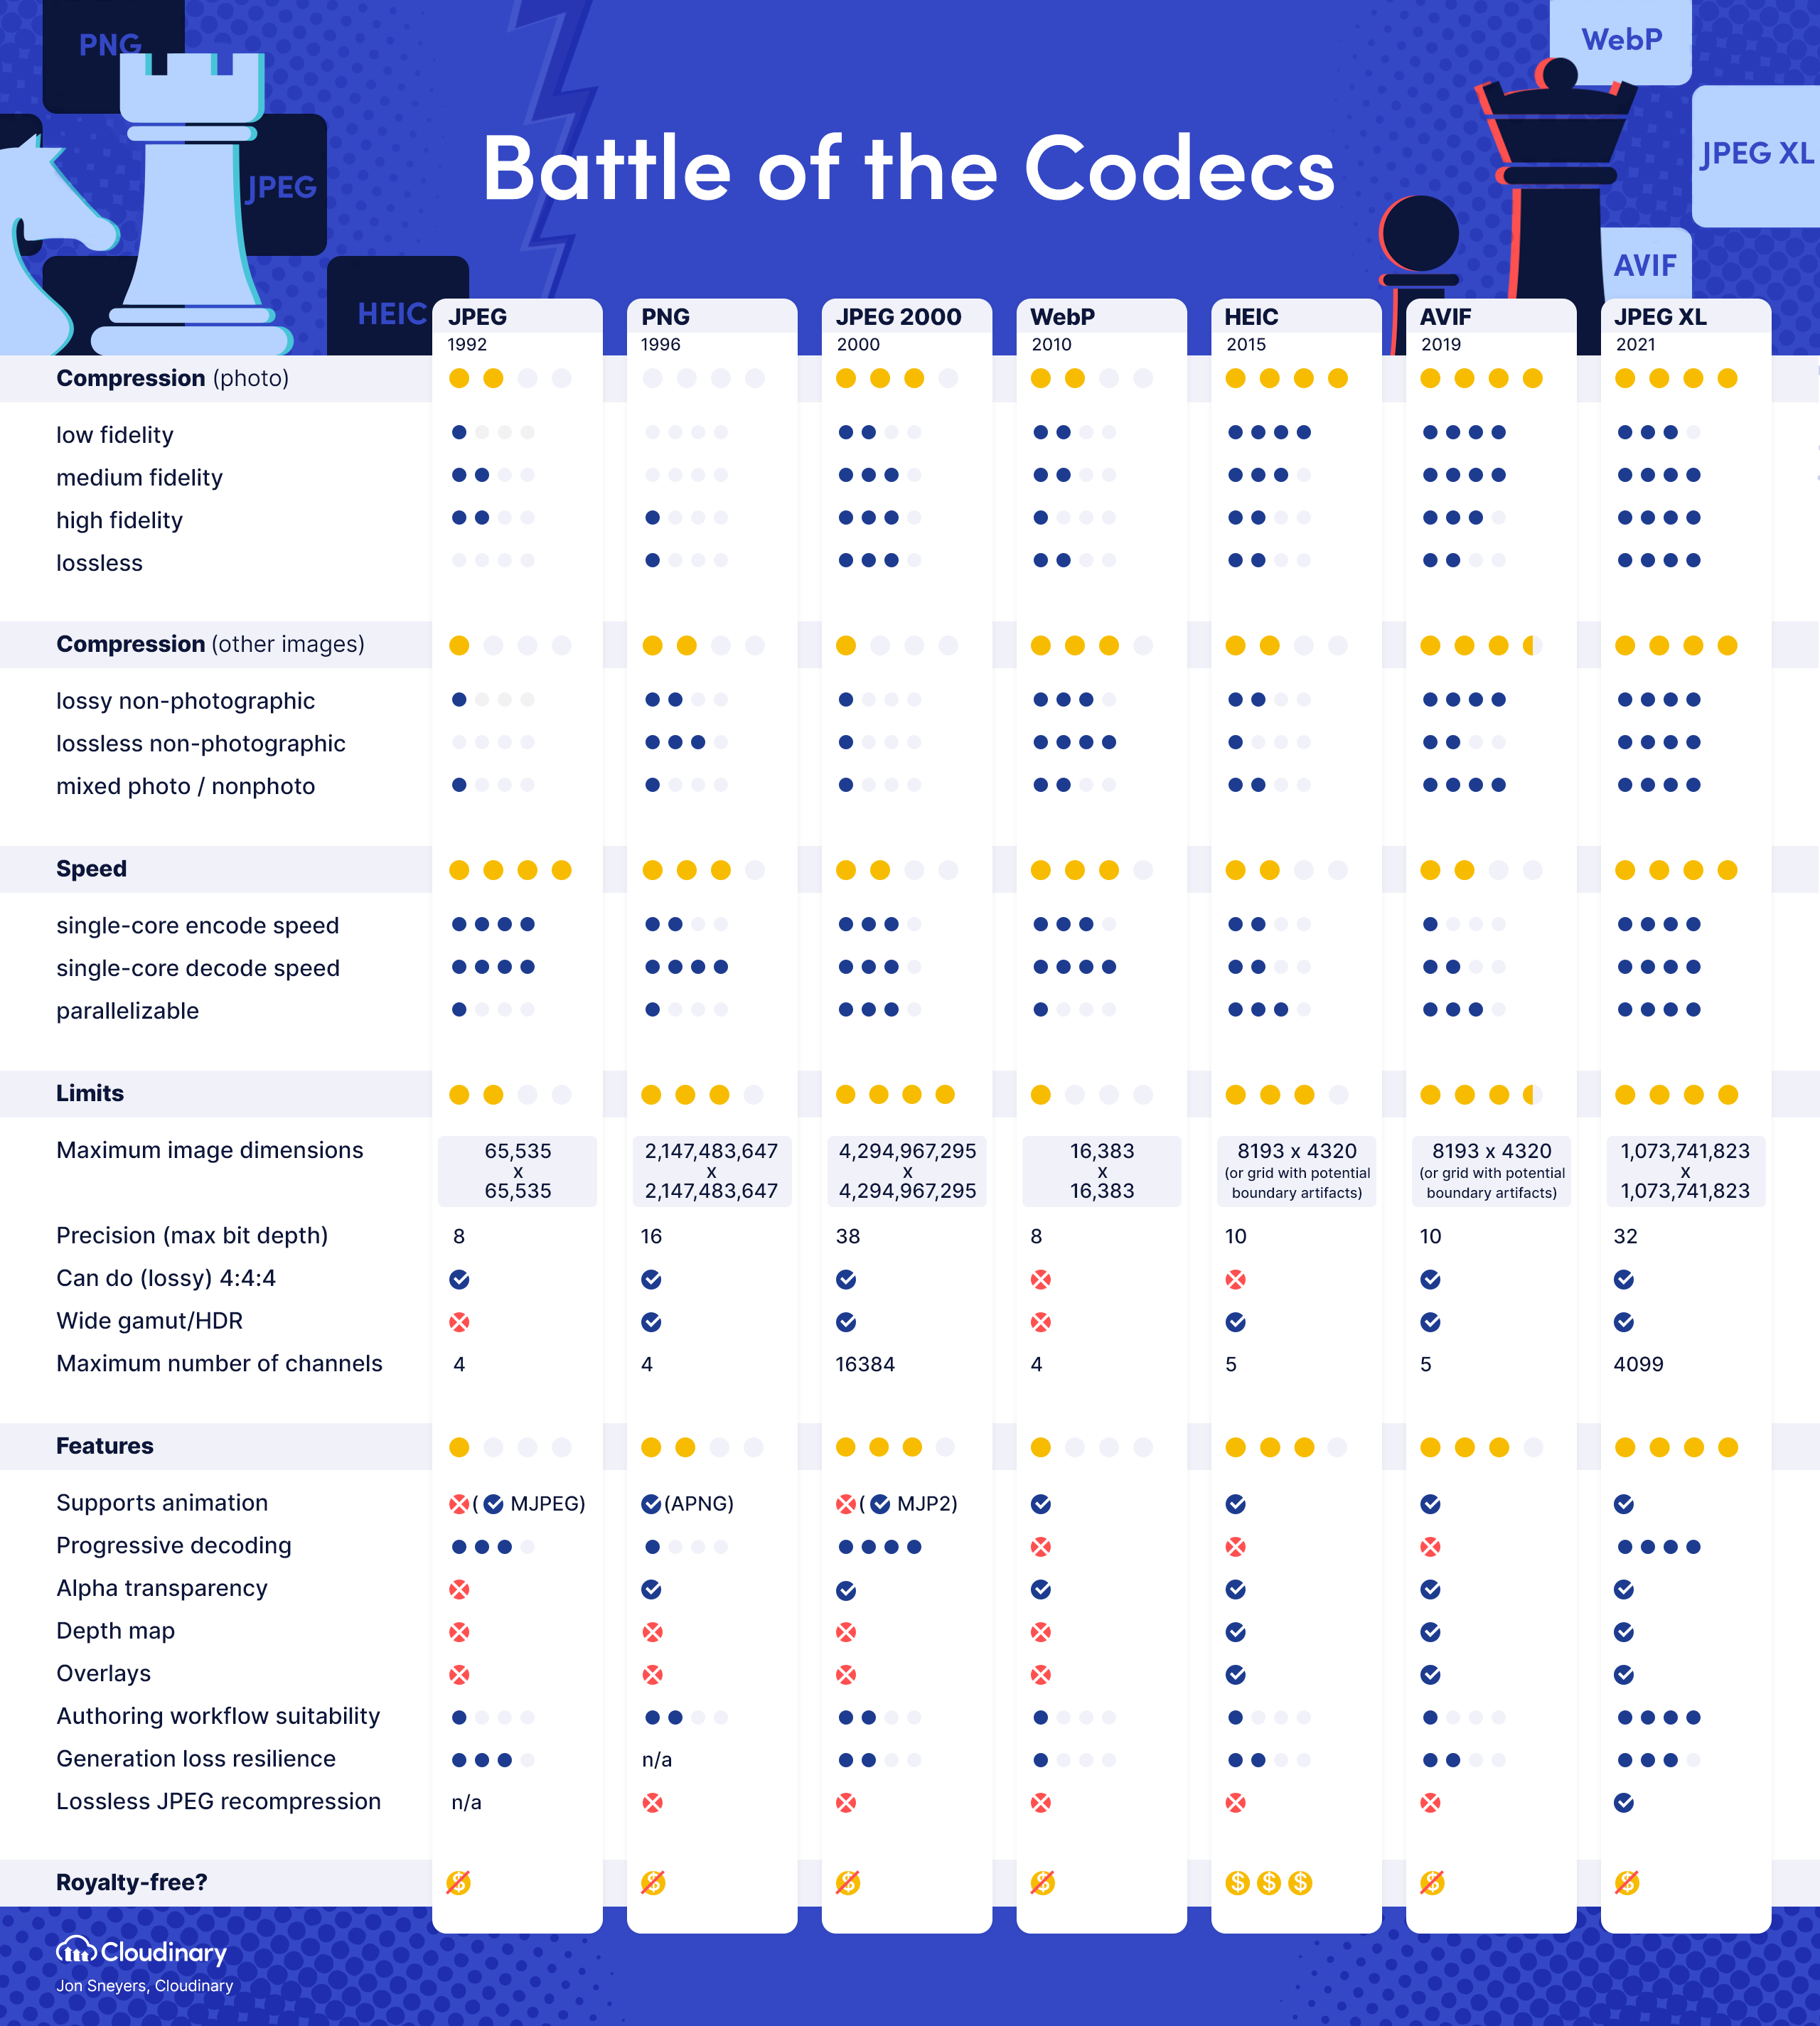 Battle of the Codecs: a comparison of JPEG, PNG, J2K, WebP, HEIC, AVIF, and JXL